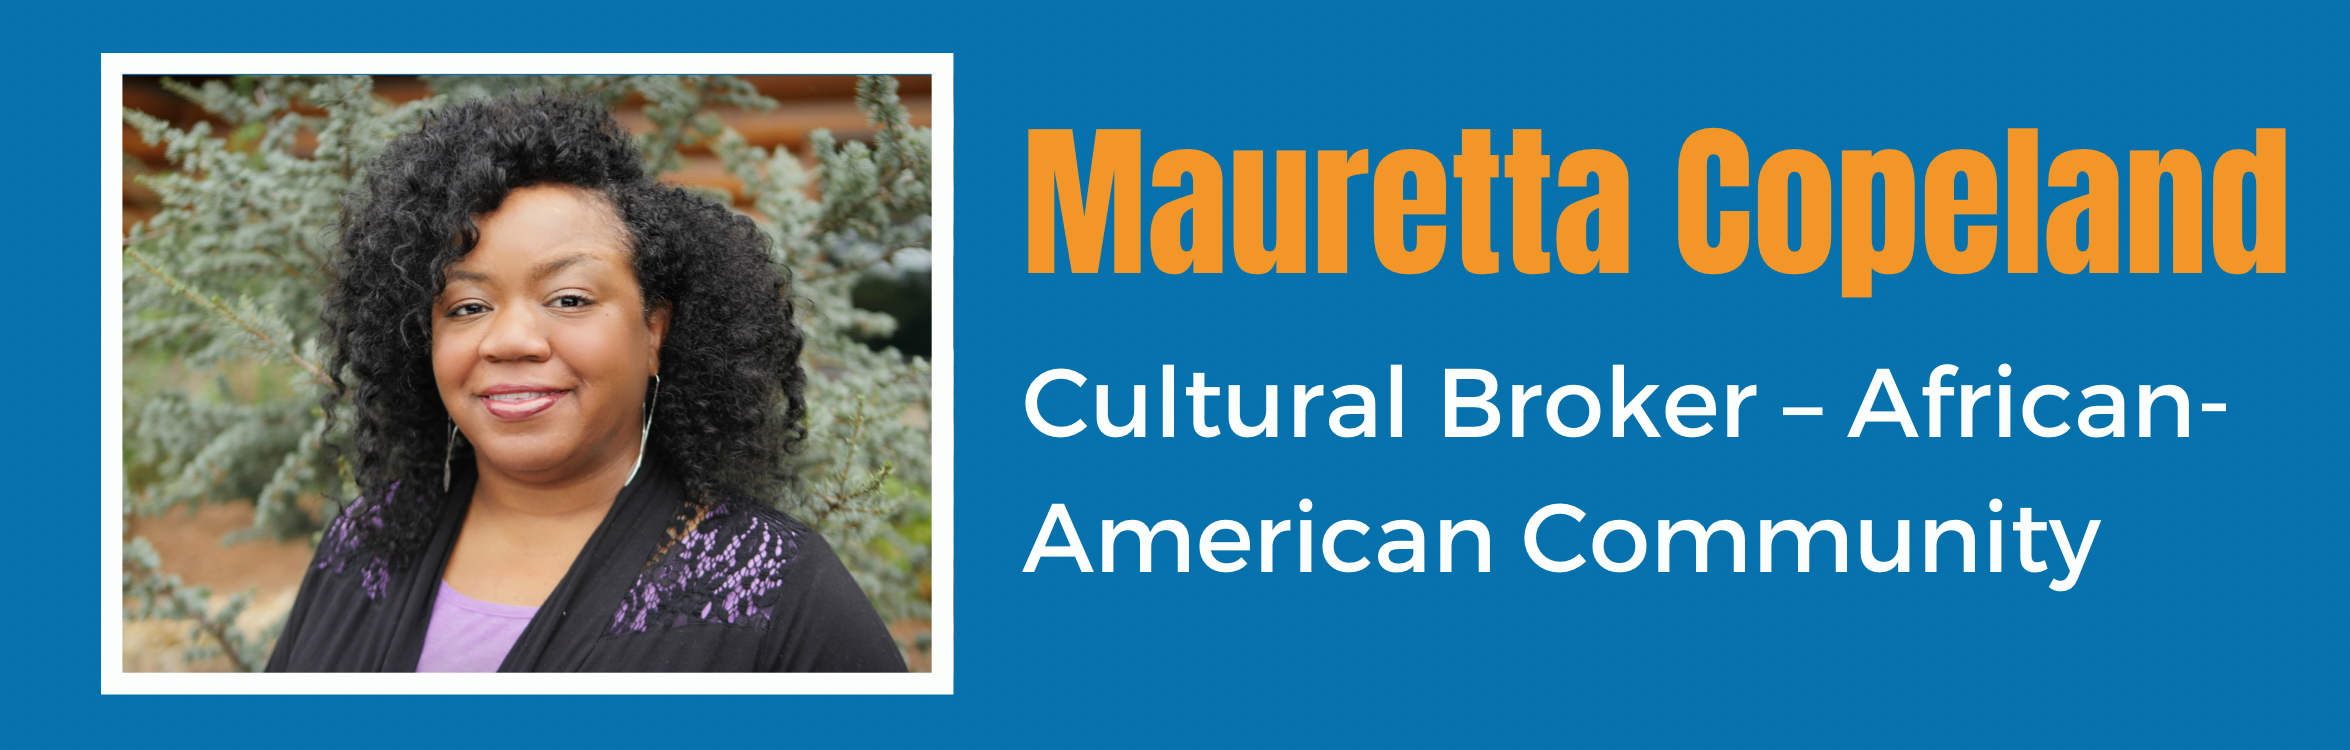 Mauretta Copeland - Cultural Broker - African American Community